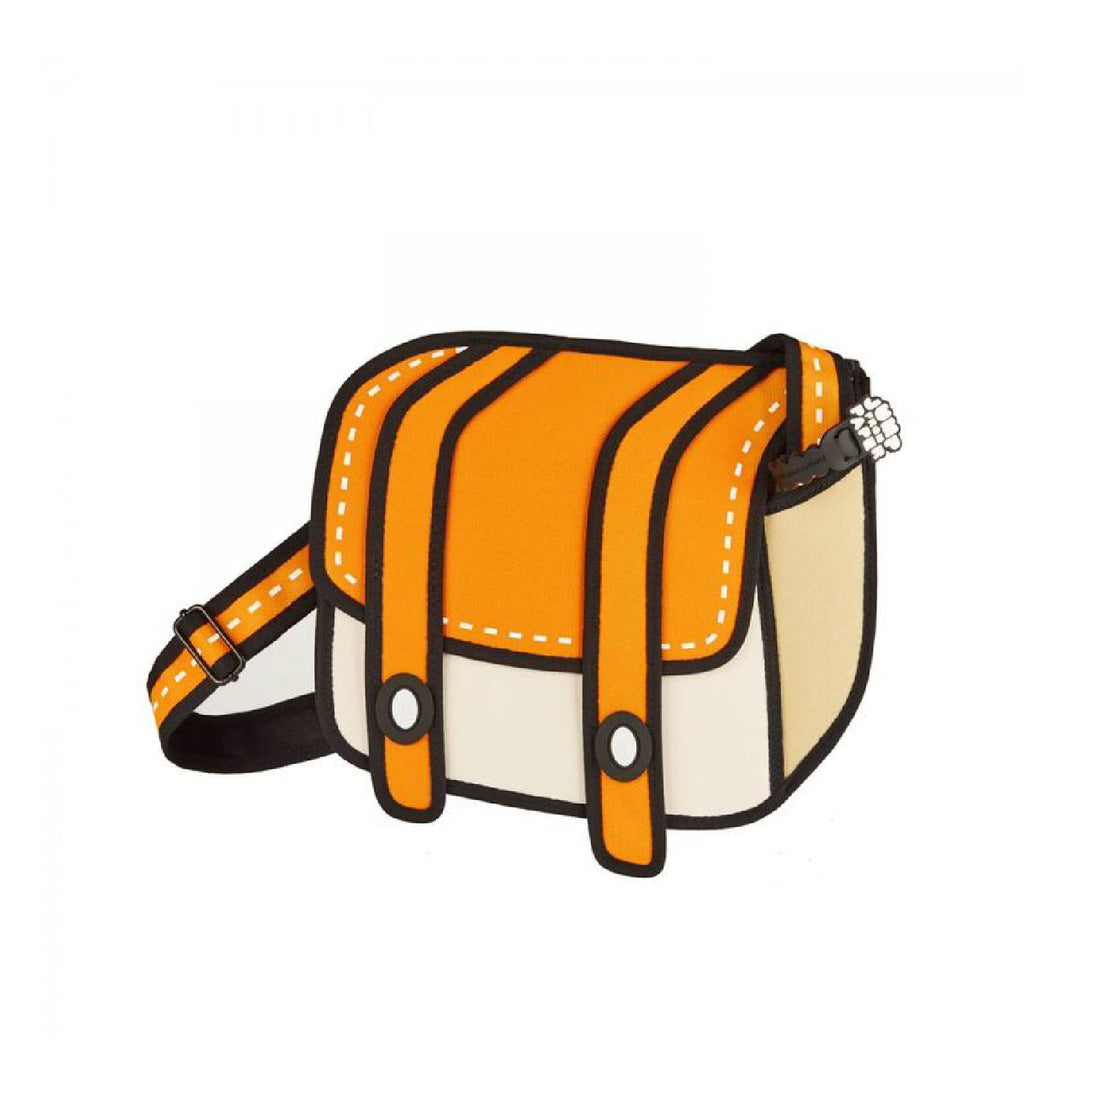 Orange Cake Bag / Metal Chain Bag